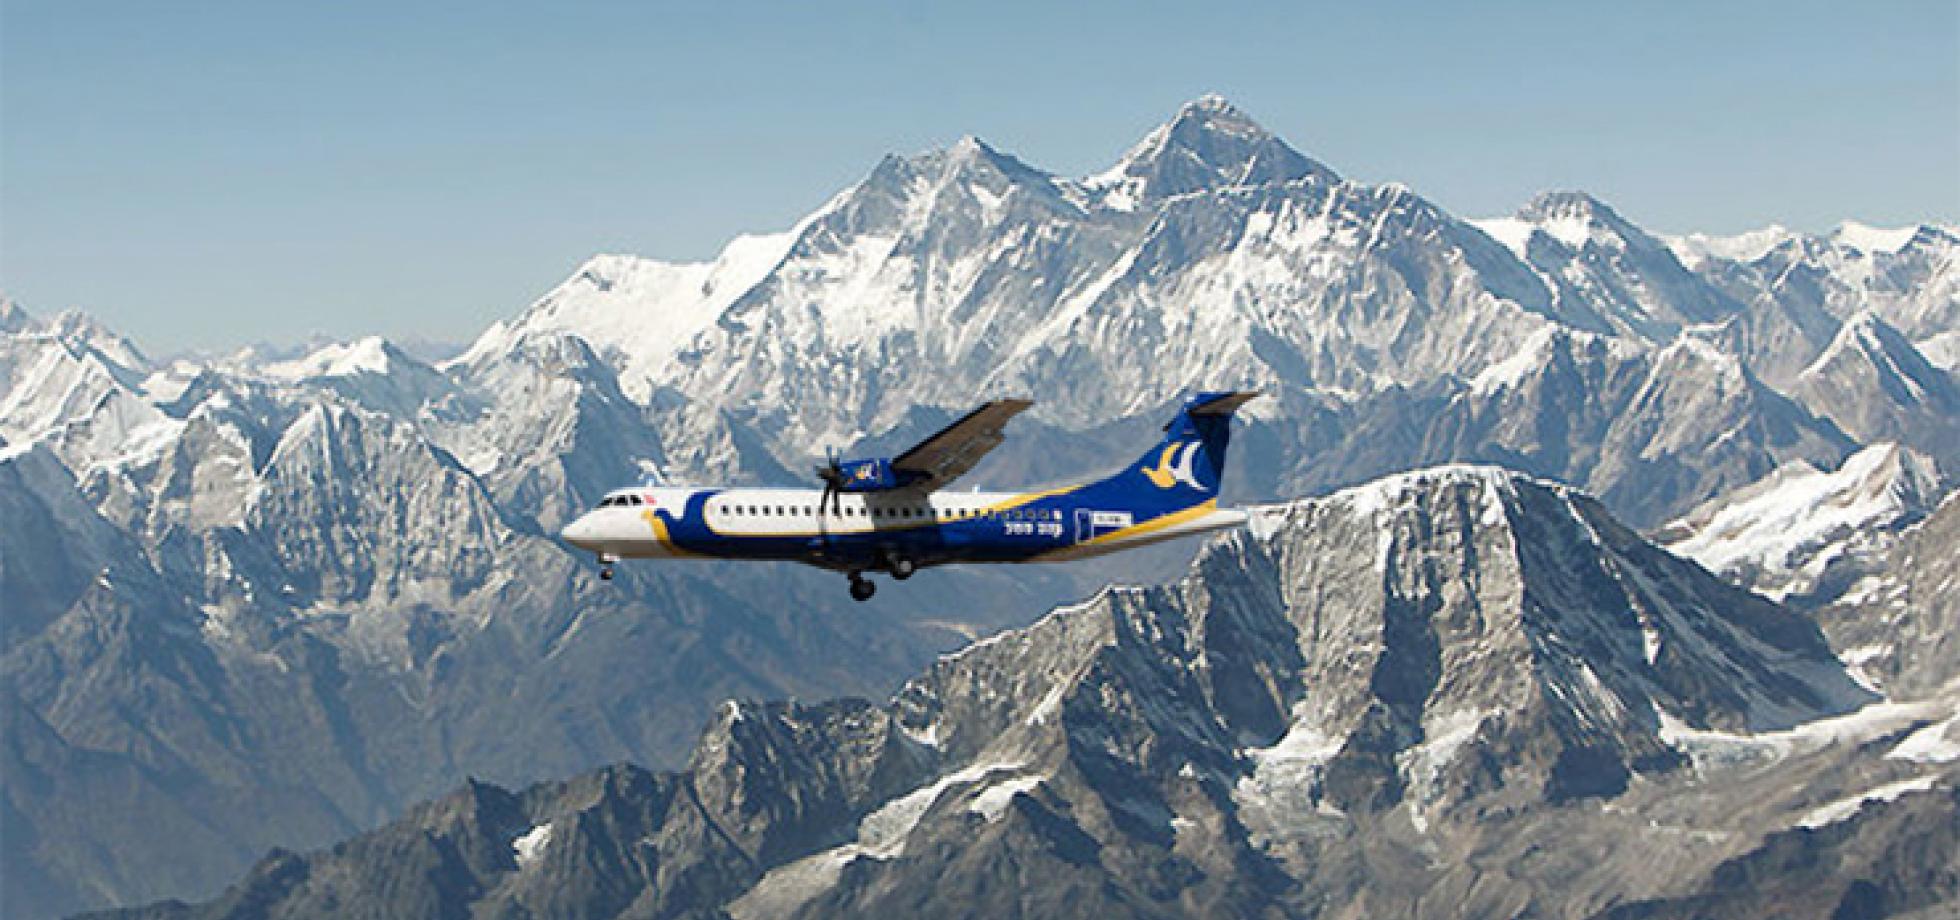 Nepal Mountain flights